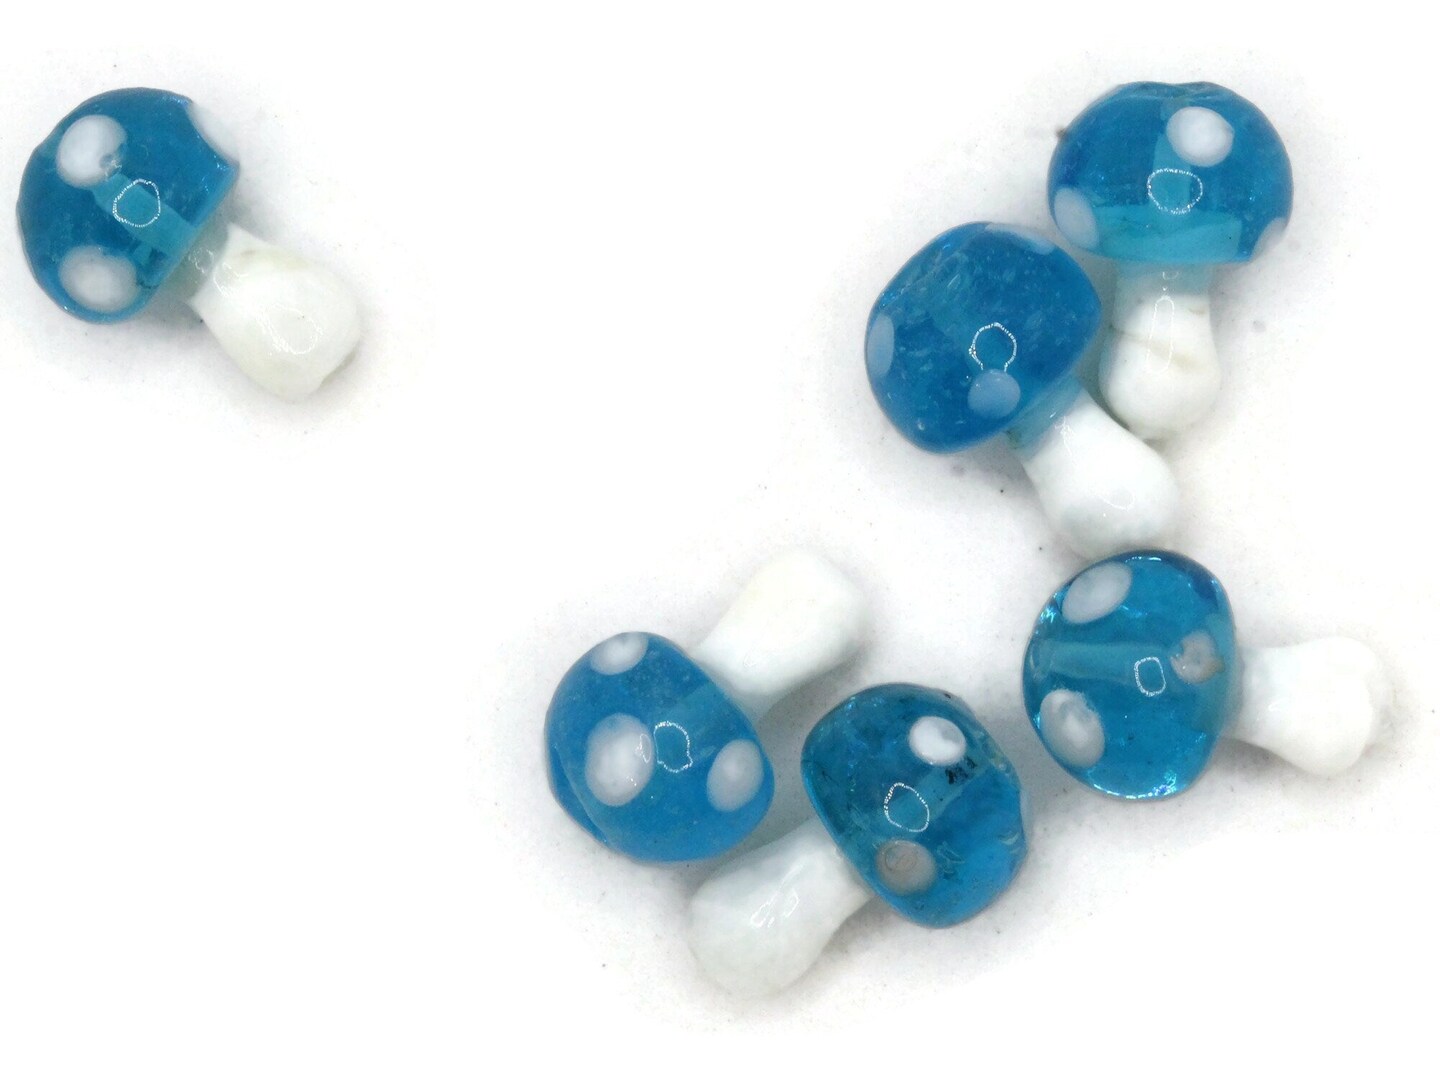 6 19mm White Mushroom Polka Dot Lampwork Glass Beads by Smileyboy Beads | Michaels